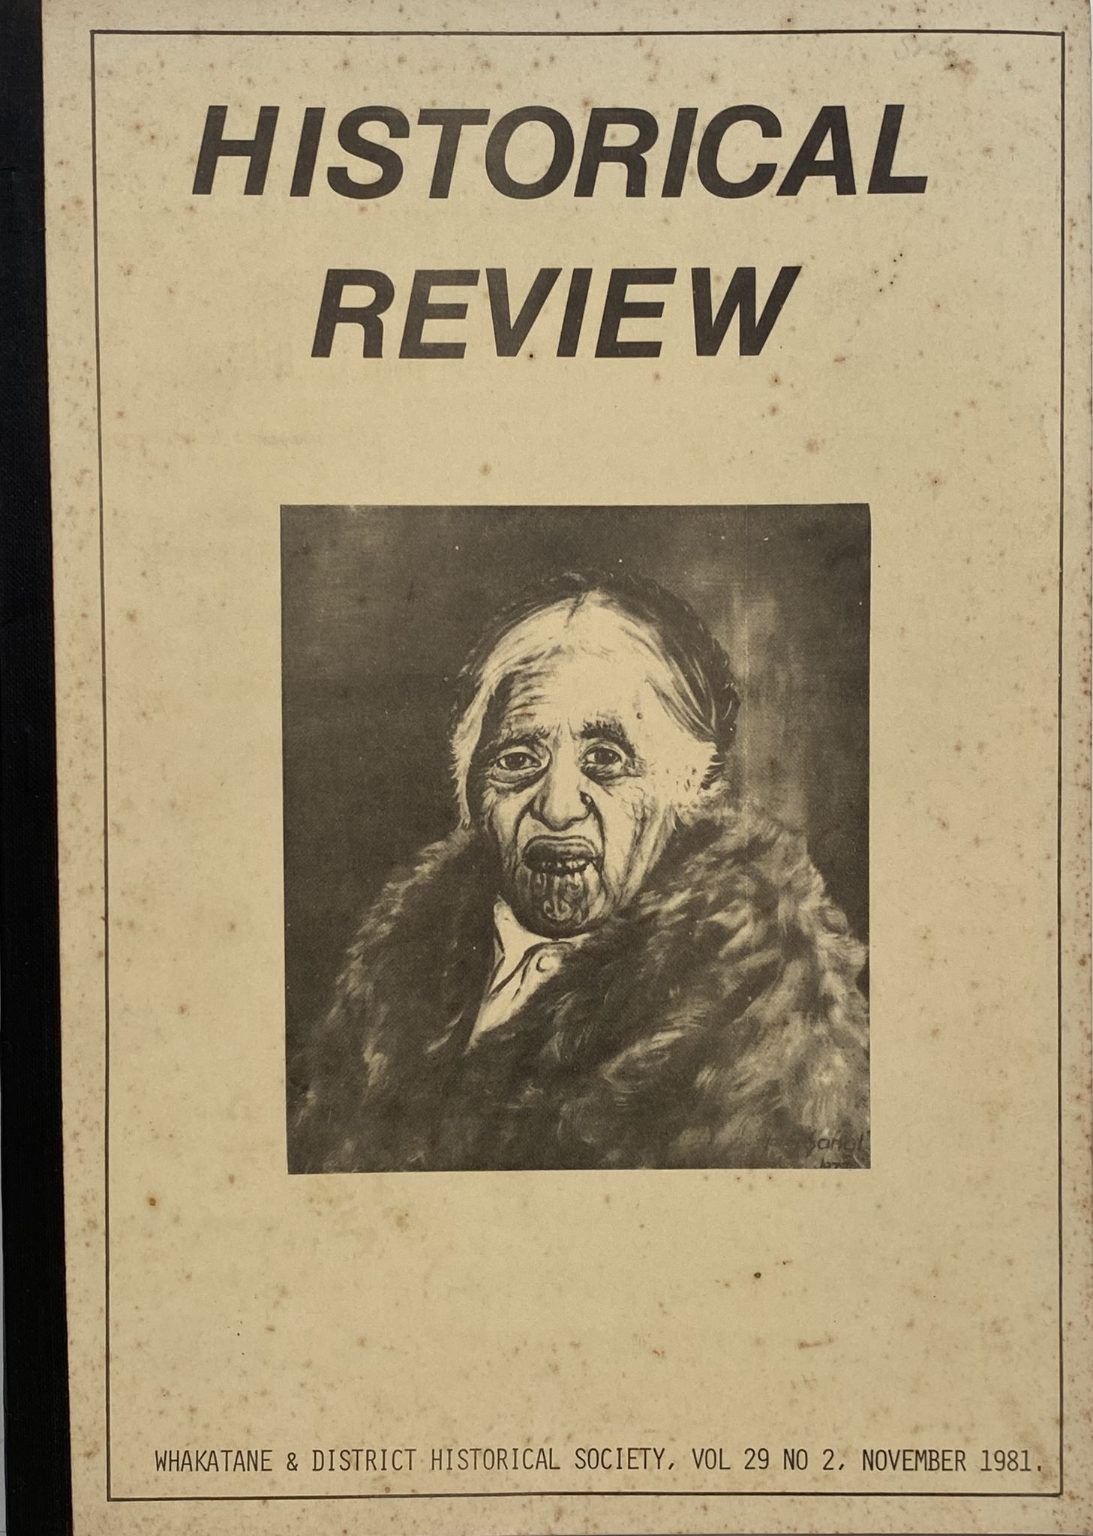 HISTORICAL REVIEW: Whakatane and District Historical Society - November 1981